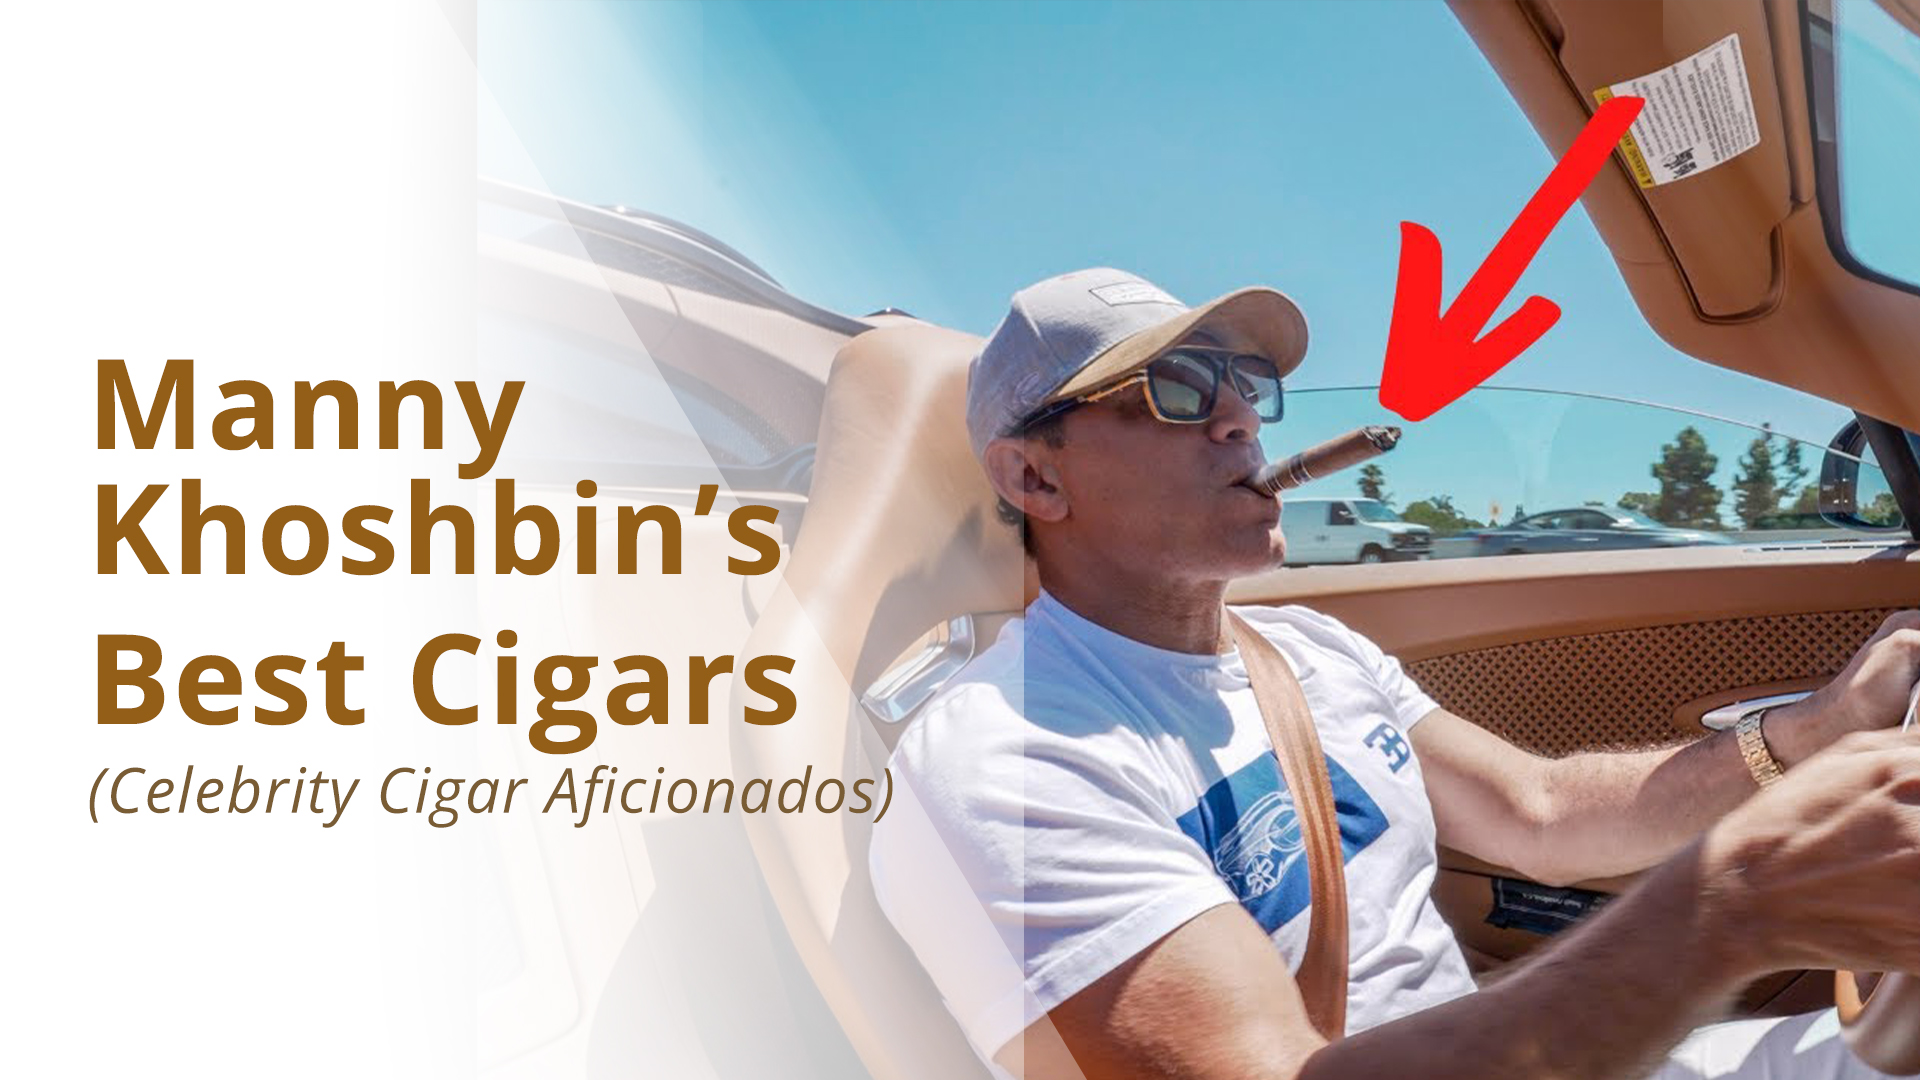 What cigars does Manny Khoshbin smoke